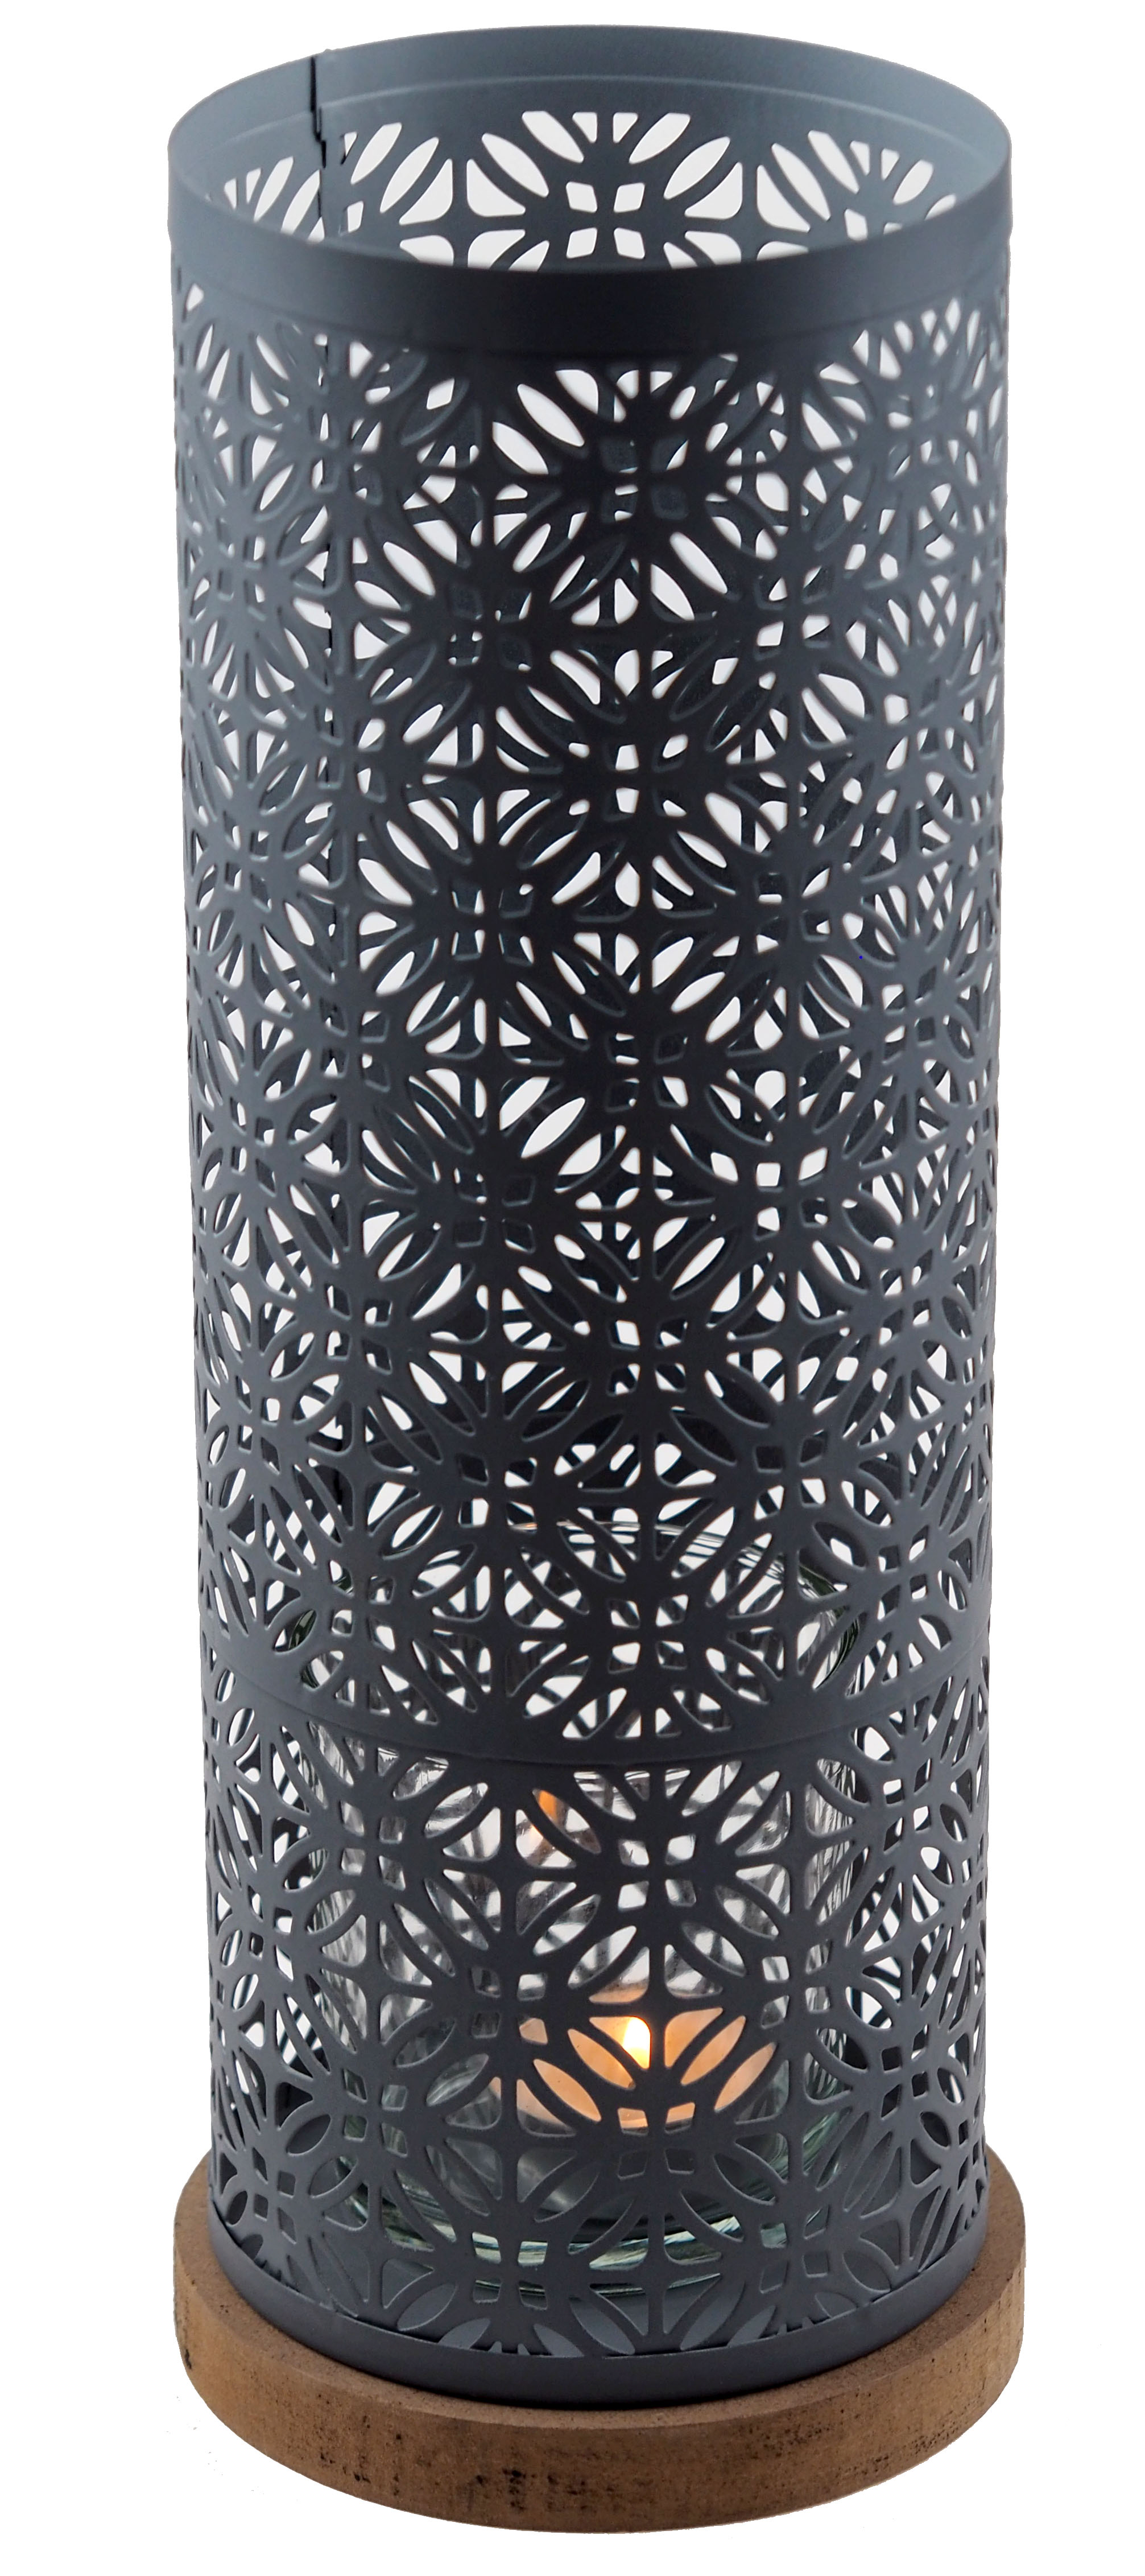 Ornate Japanese Inspired Tea Light Candle Holder 30cm Ornament - Grey